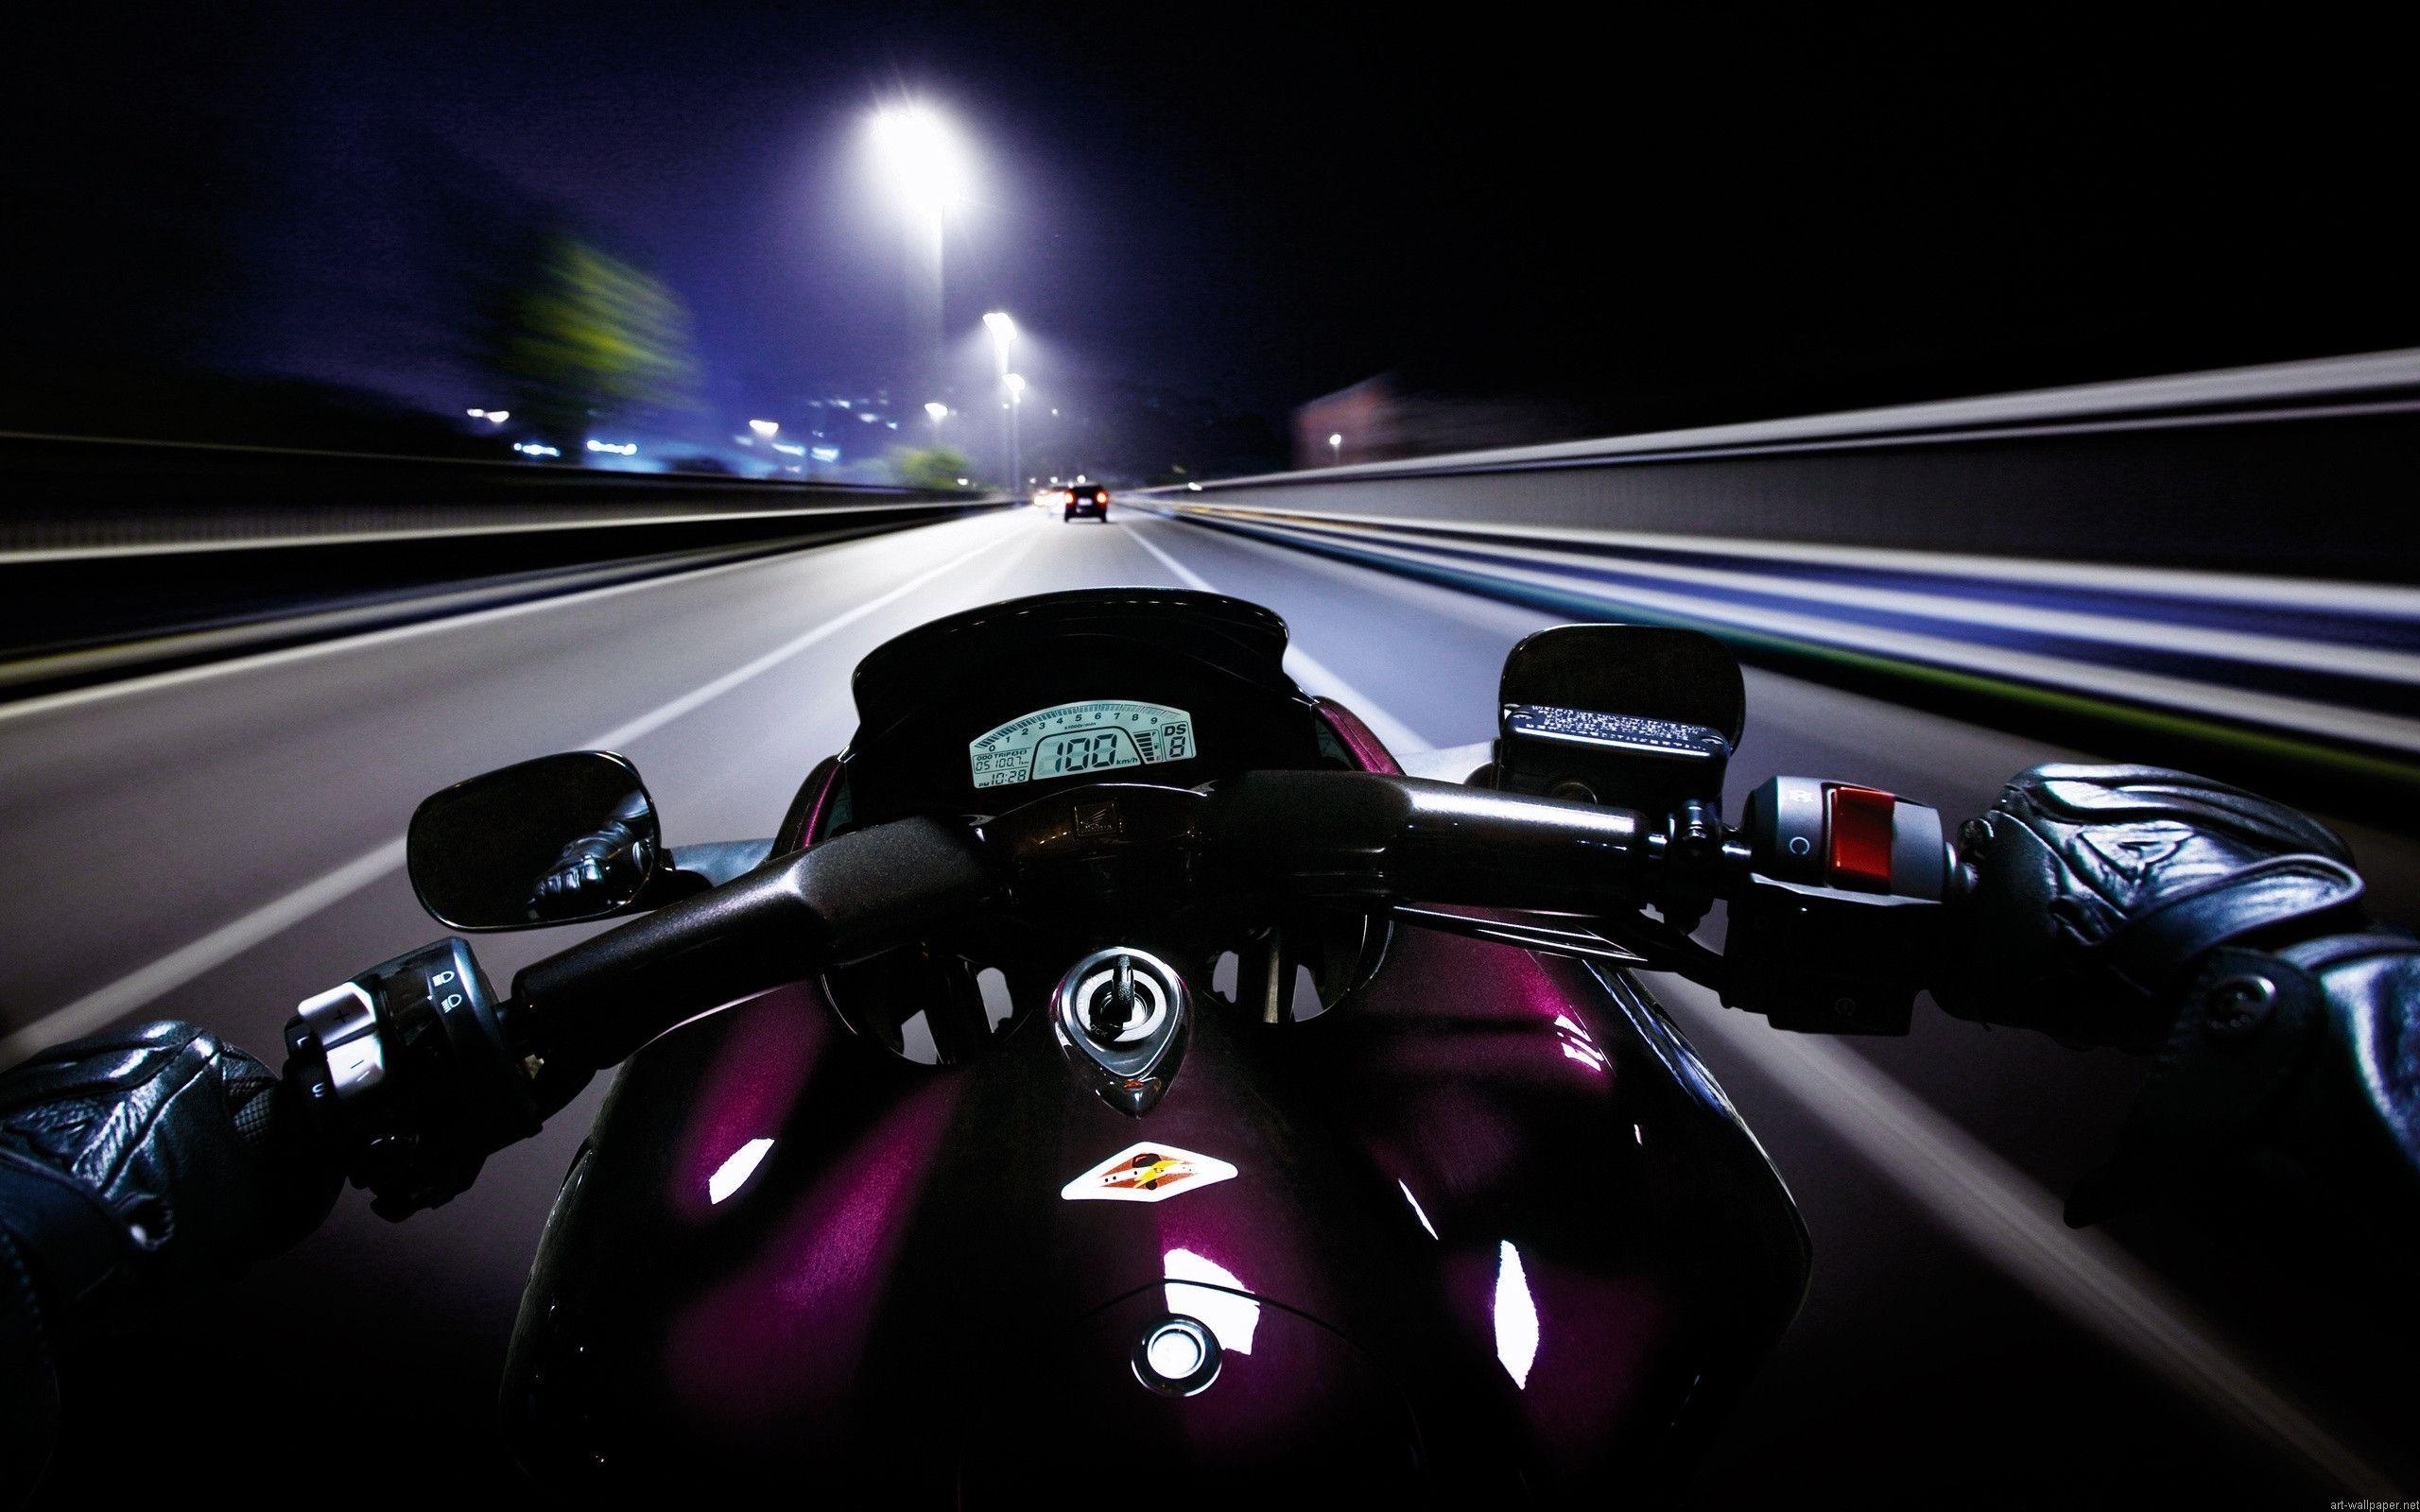 HD Wallpaper Motorcycle Speed Image View. Free HD Wallpaper Desktop